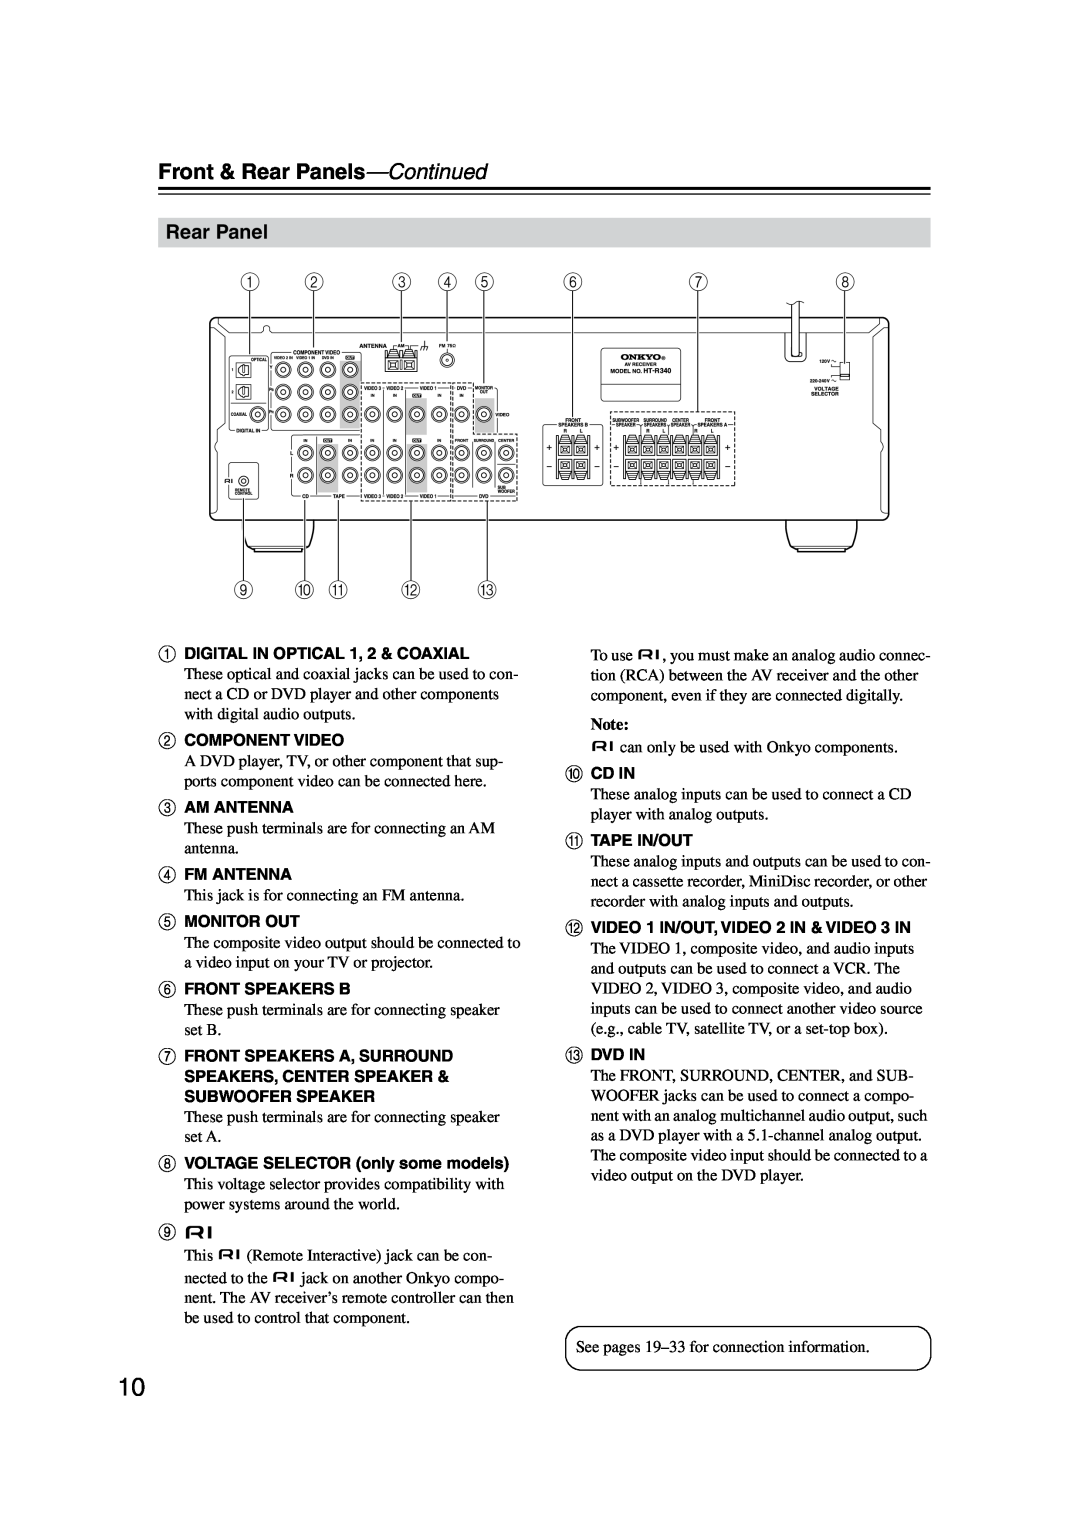 Onkyo HT-S590 instruction manual J K L M, Front & Rear Panels-Continued 